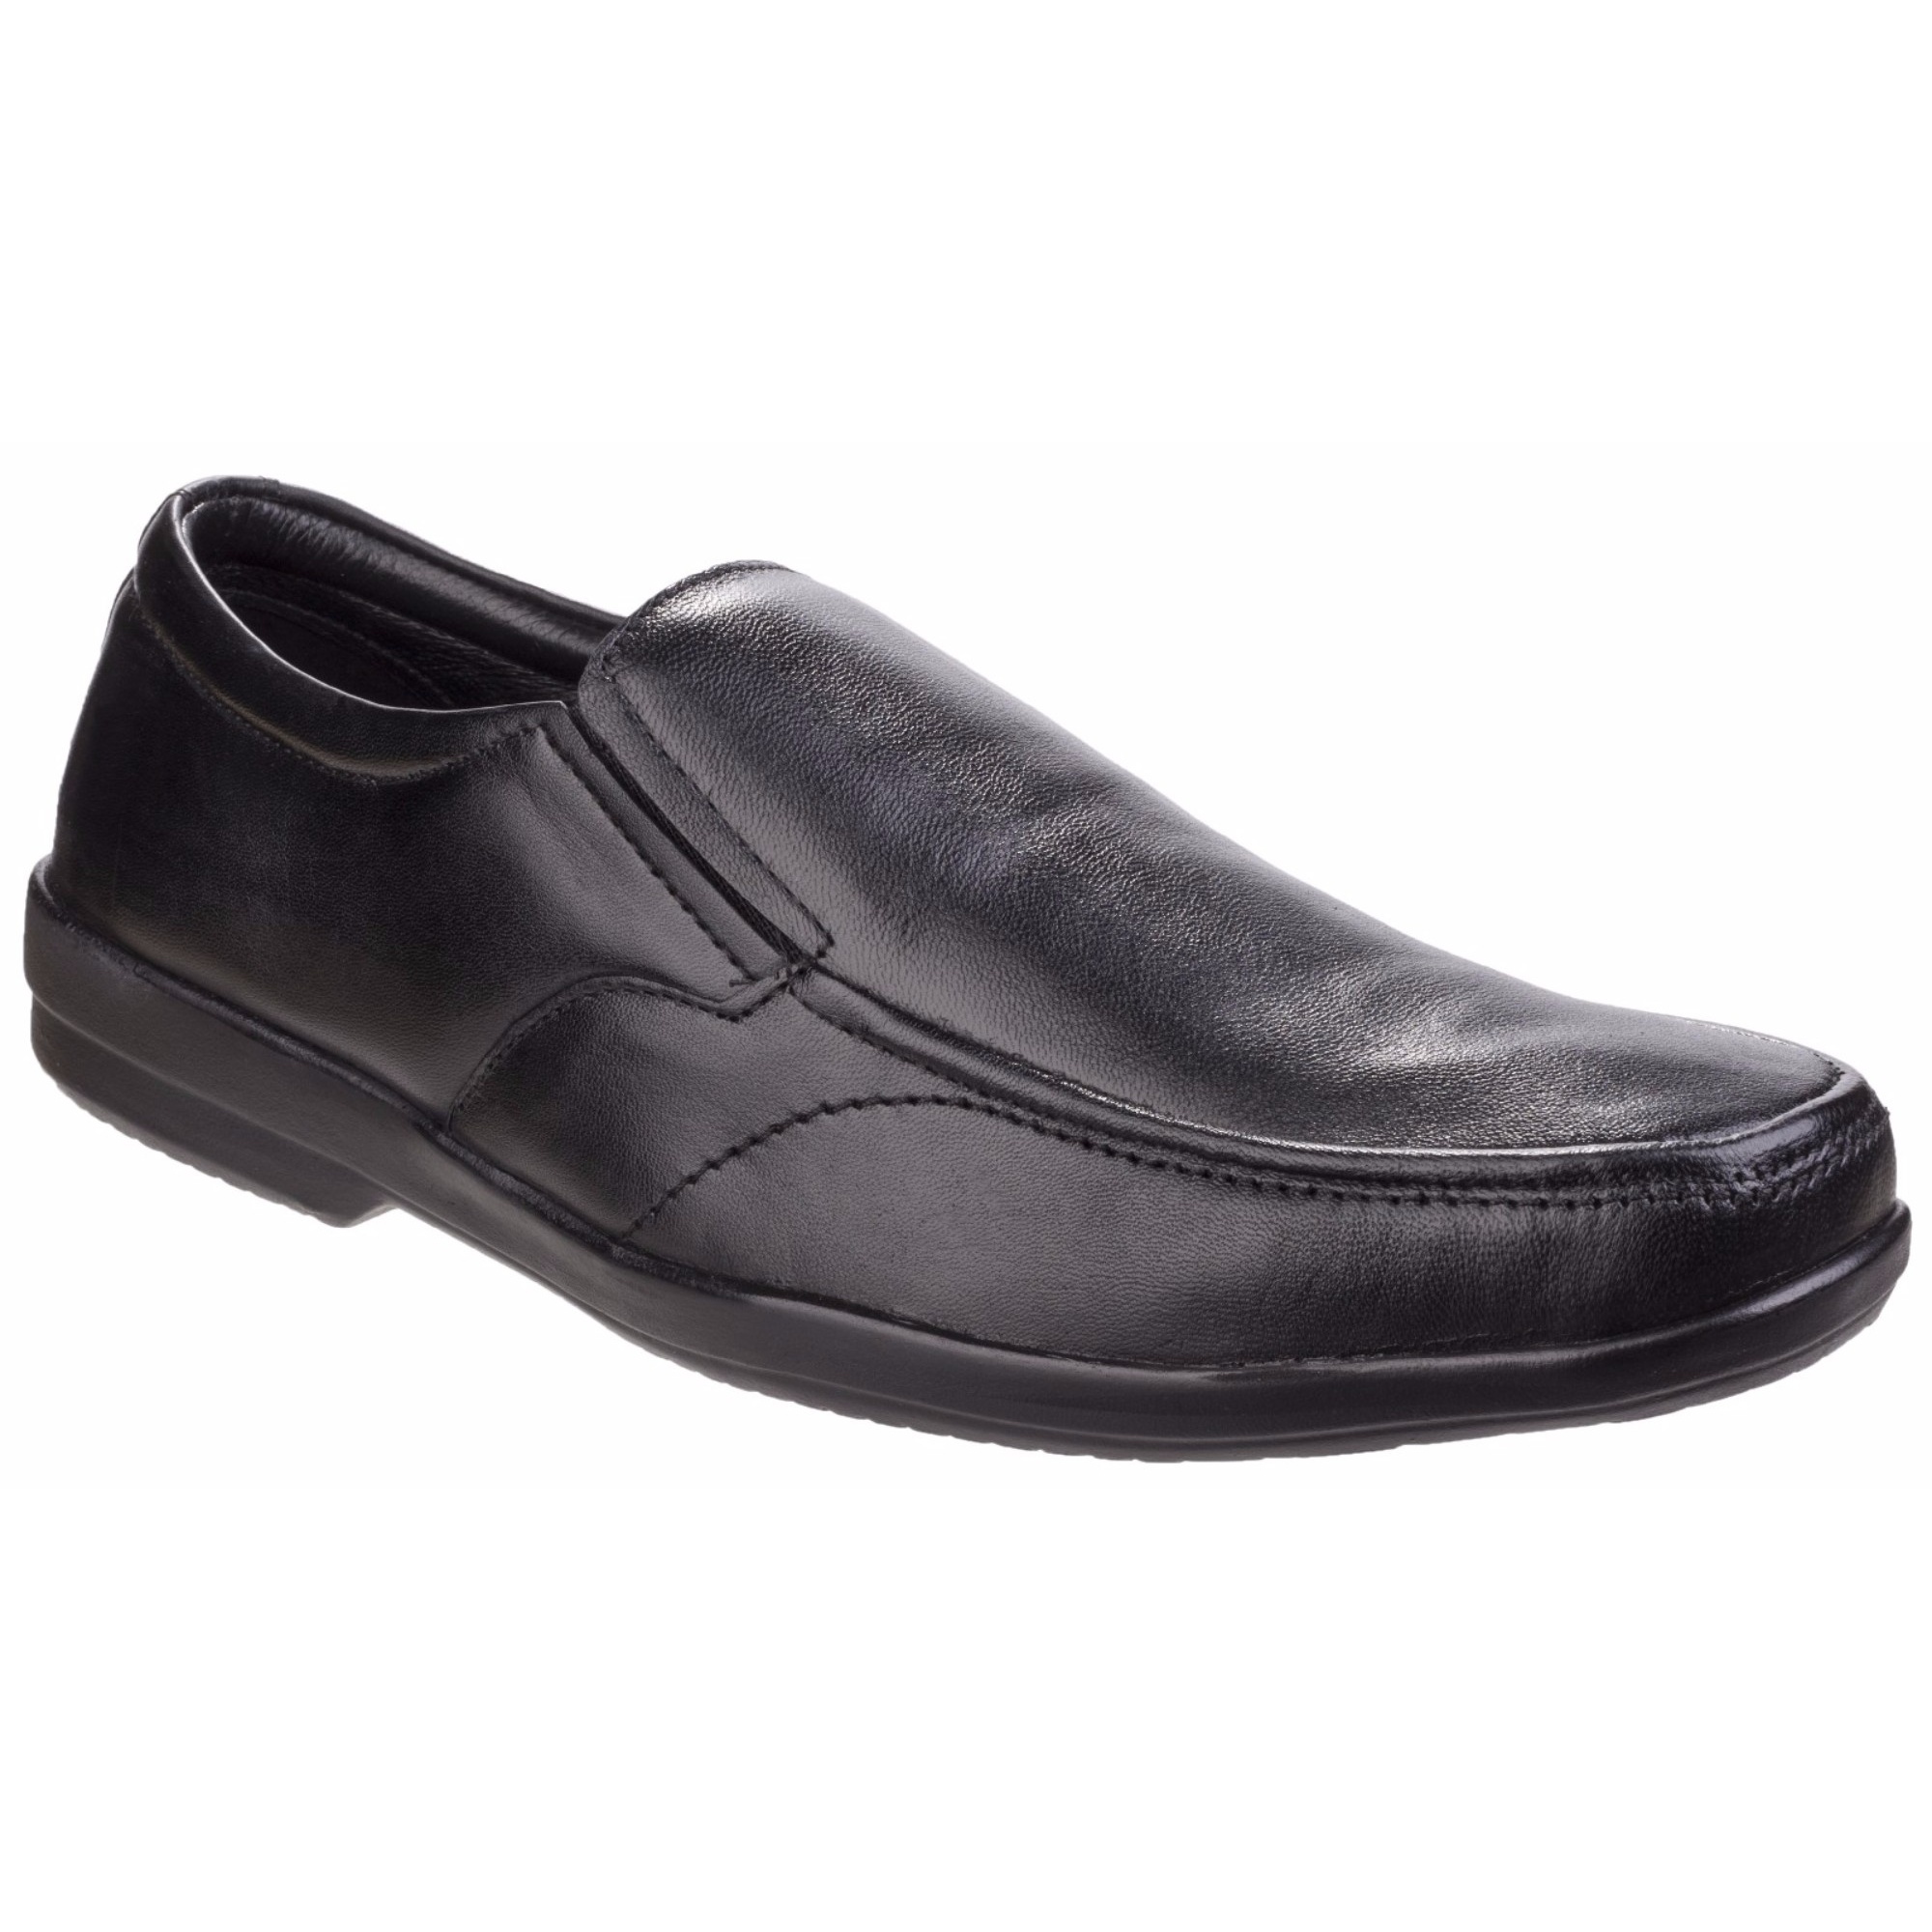 Fleet & Foster Mens Alan Formal Apron Toe Slip On Shoes - image 1 of 6